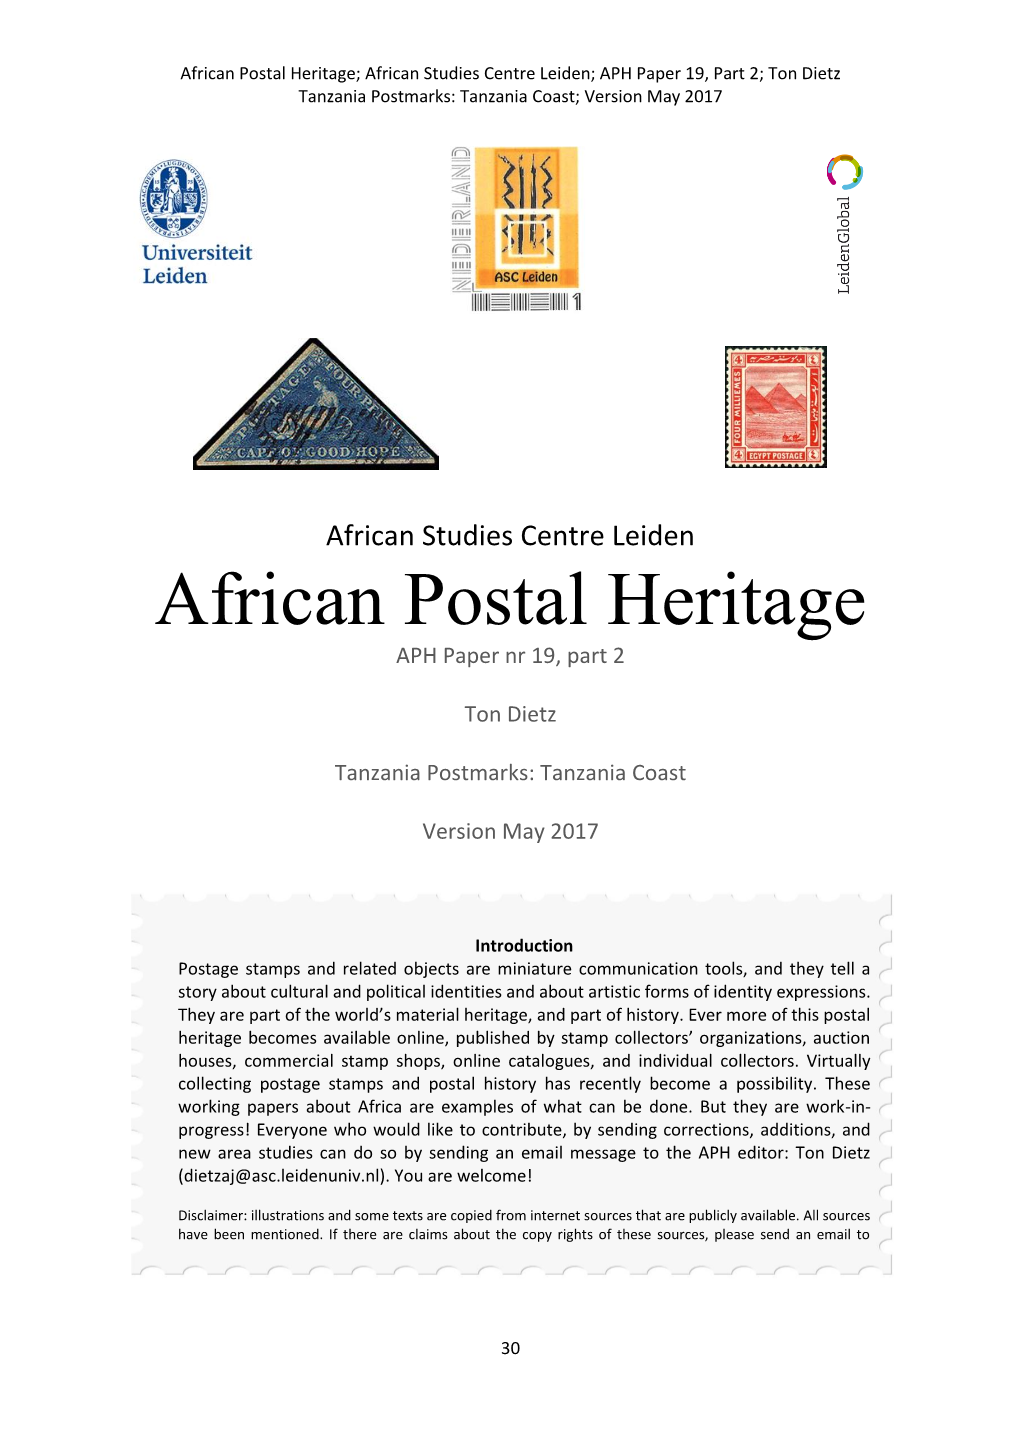 African Postal Heritage; African Studies Centre Leiden; APH Paper 19, Part 2; Ton Dietz Tanzania Postmarks: Tanzania Coast; Version May 2017